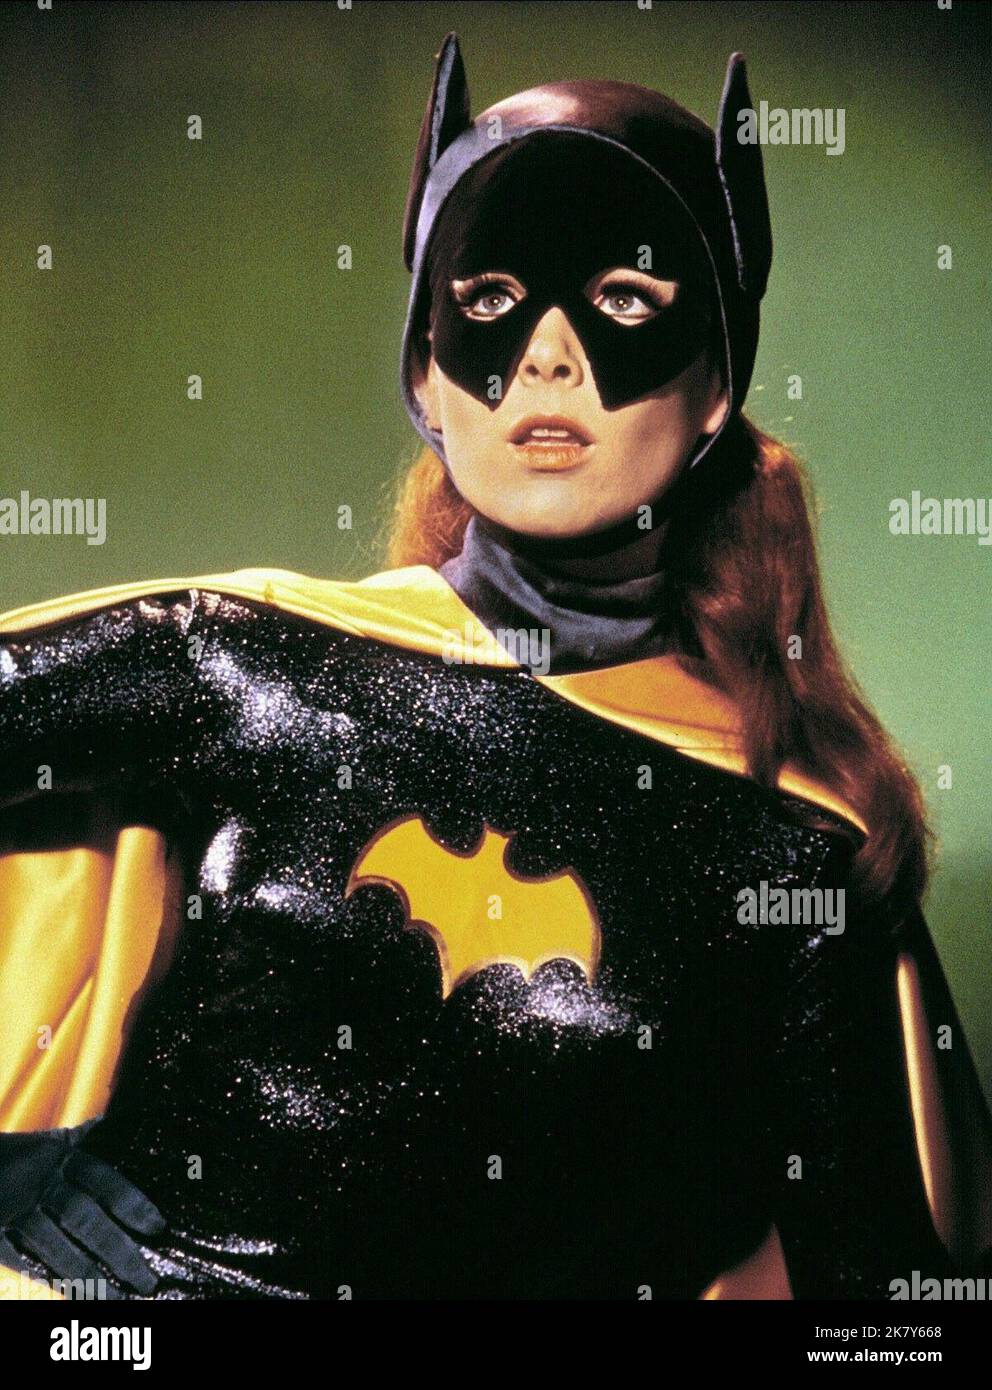 Barbara gordon batgirl hi-res stock photography and images - Alamy